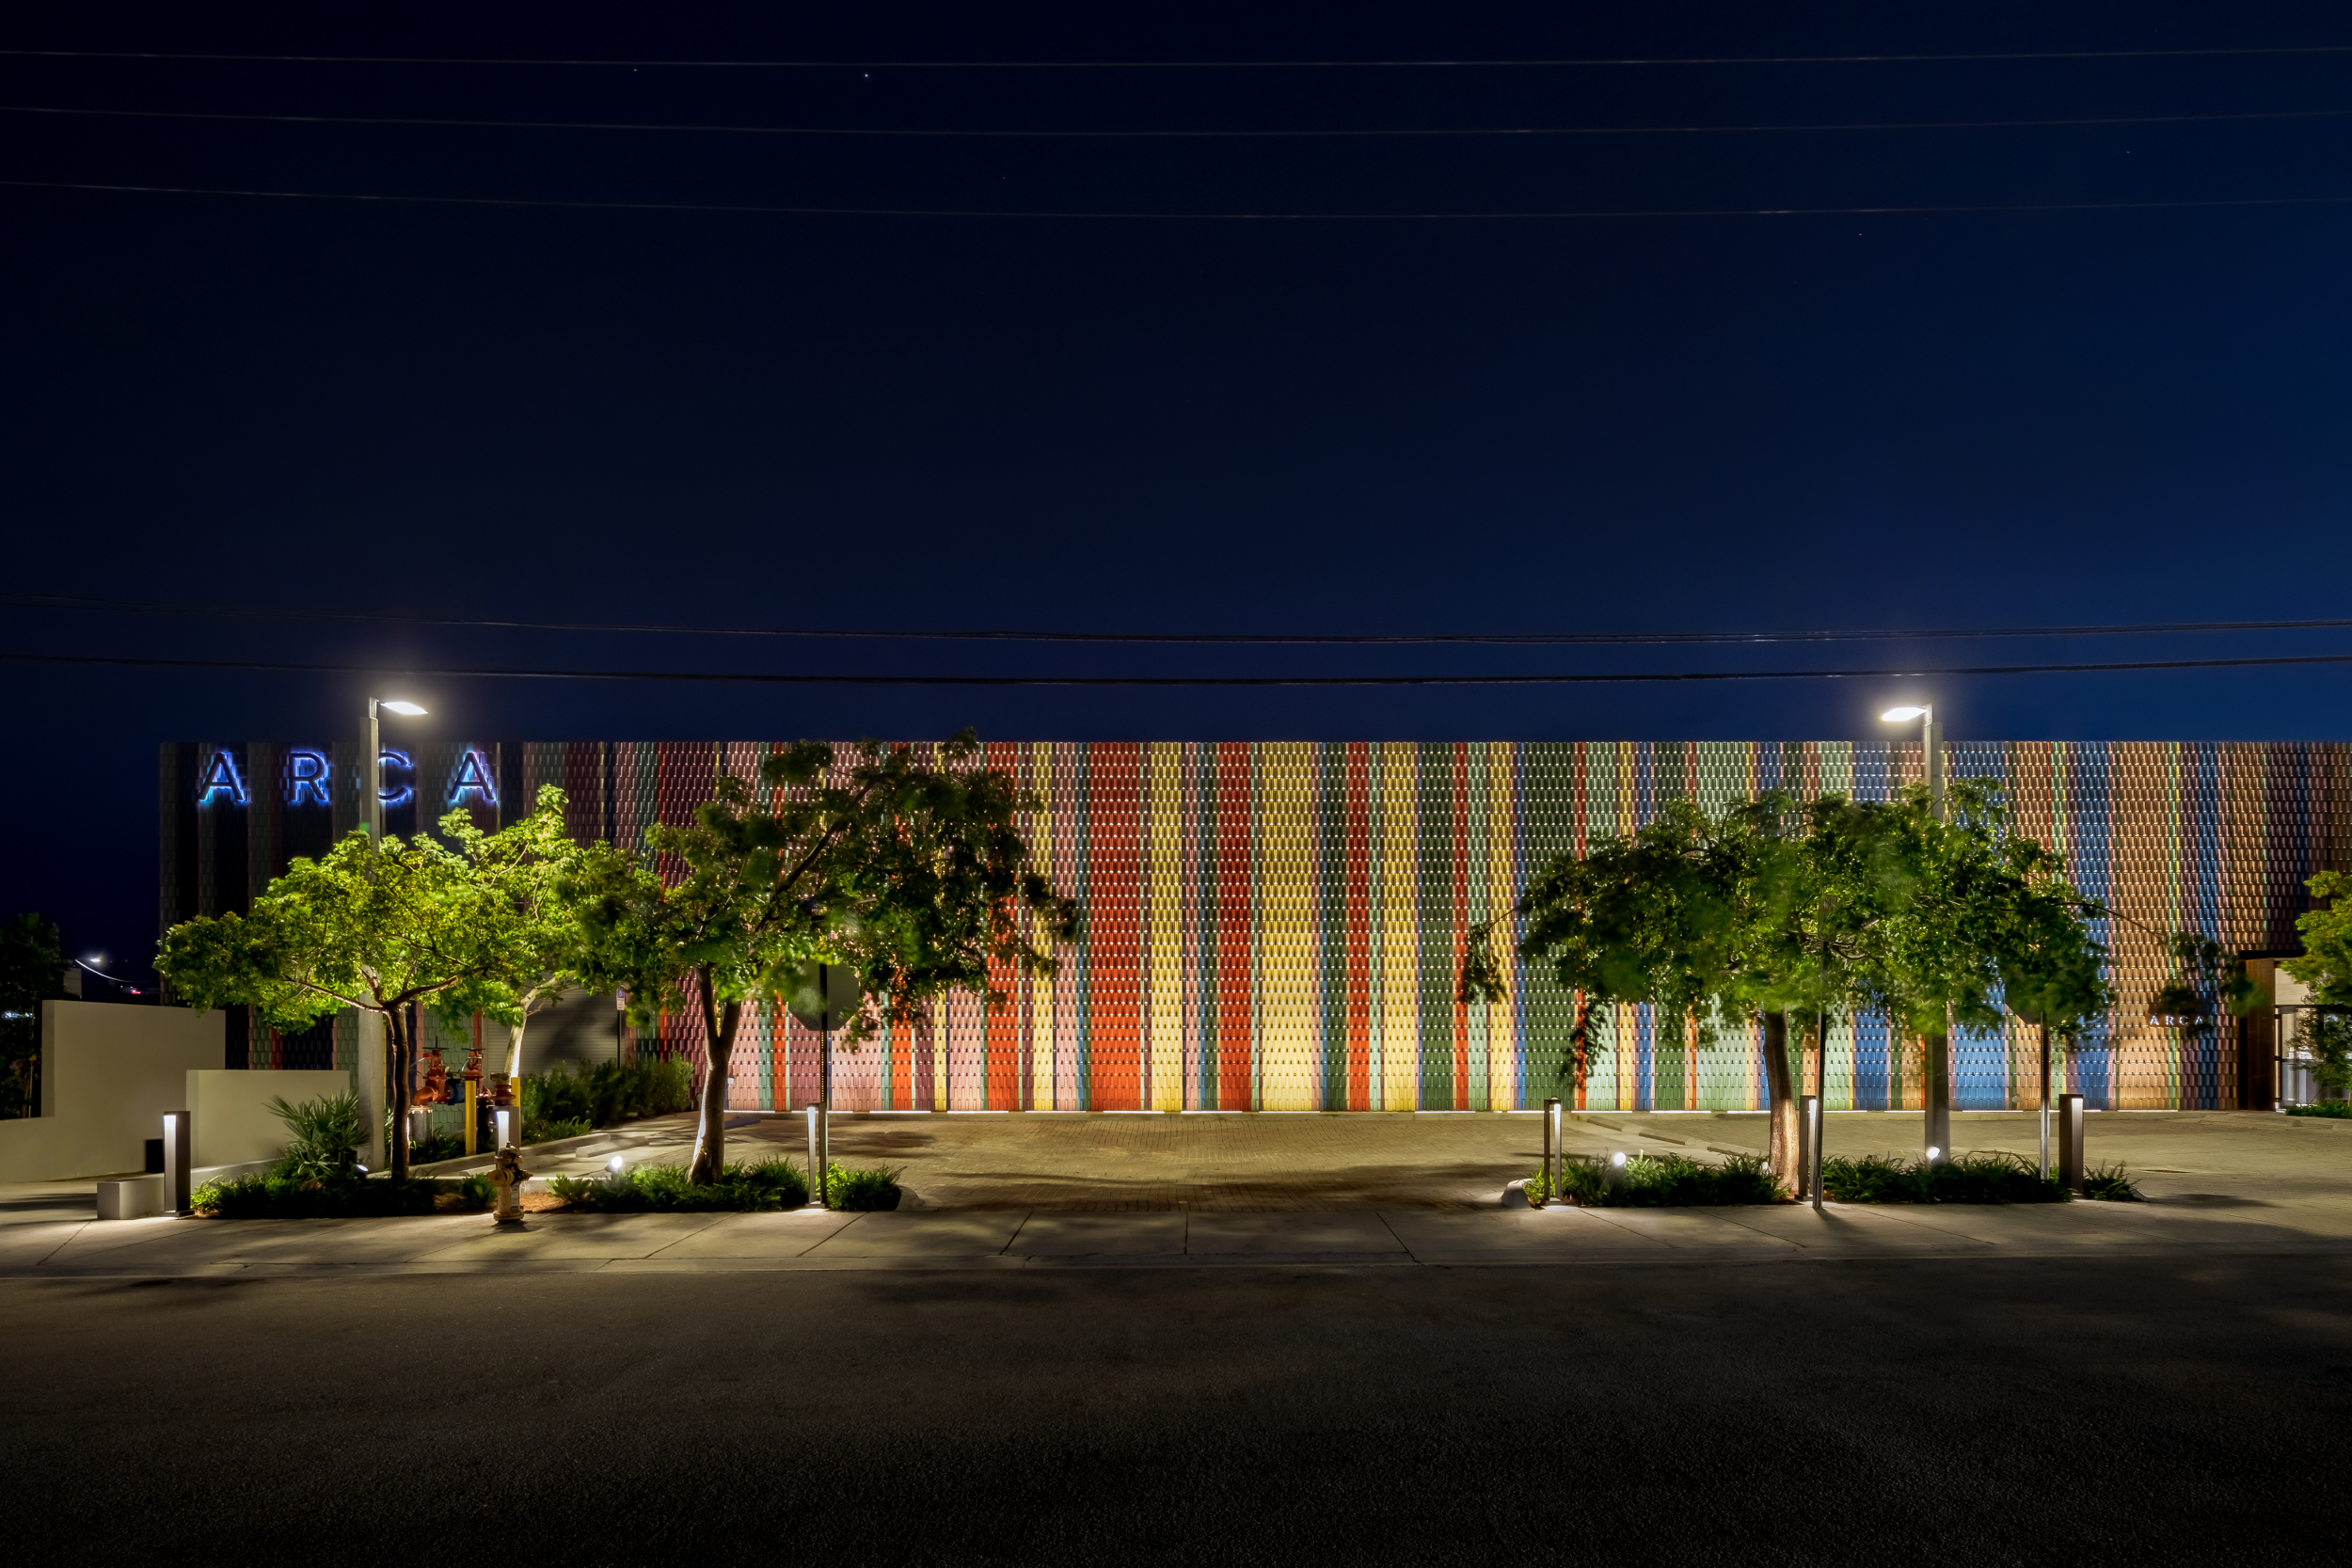 ARCA Wynwood Design Center by Esrawe Studio, Miami, Florida